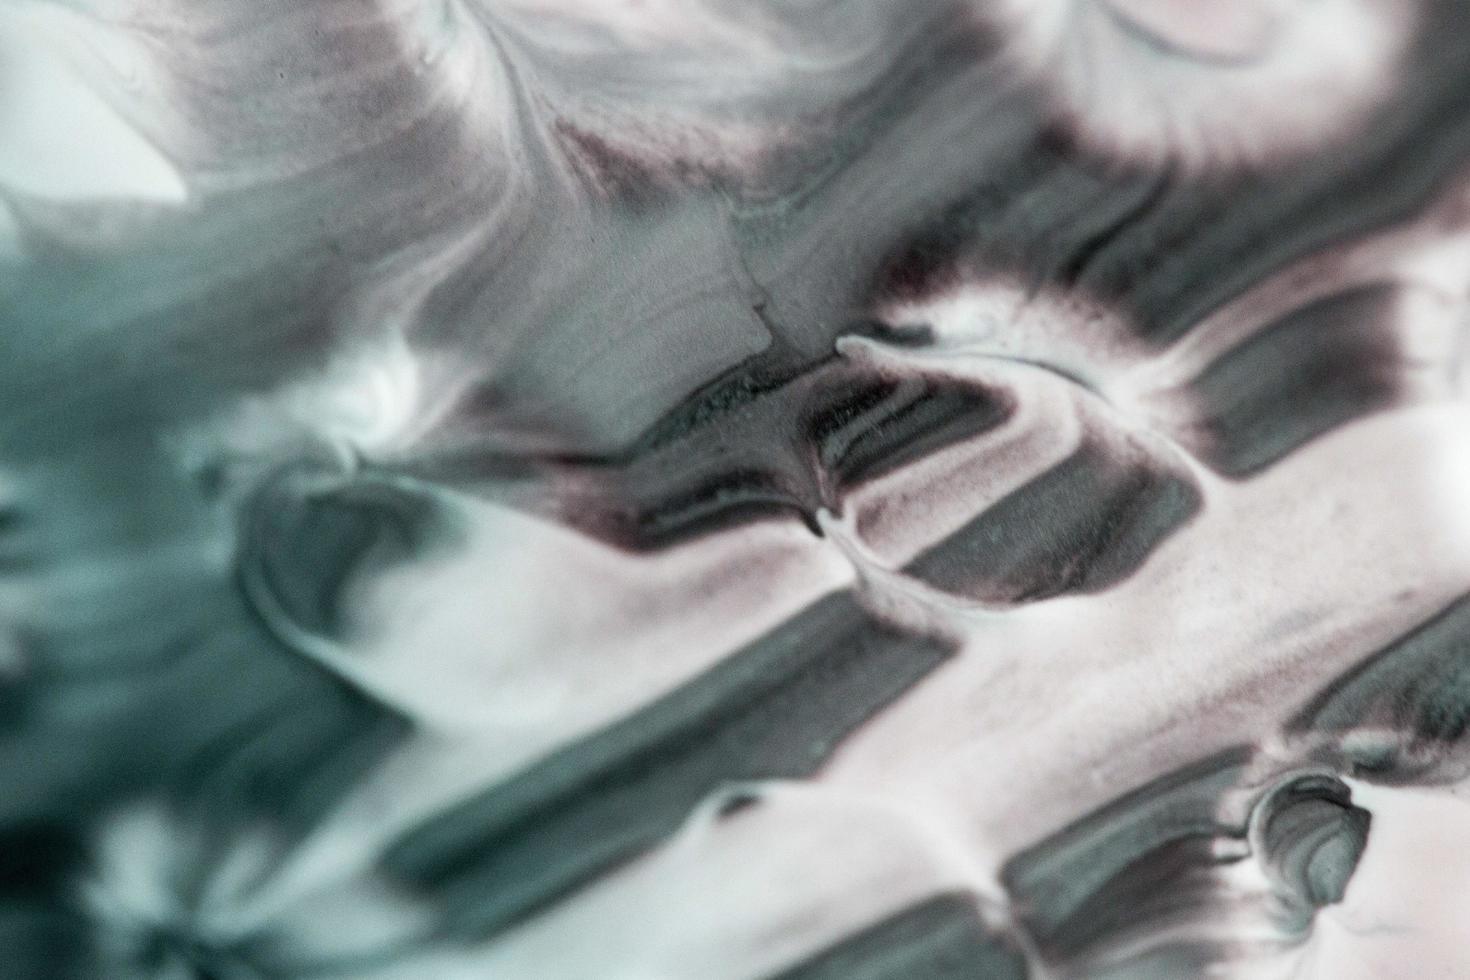 abstract beautiful liquid marble fluid acrylic paint vibrant texture. photo